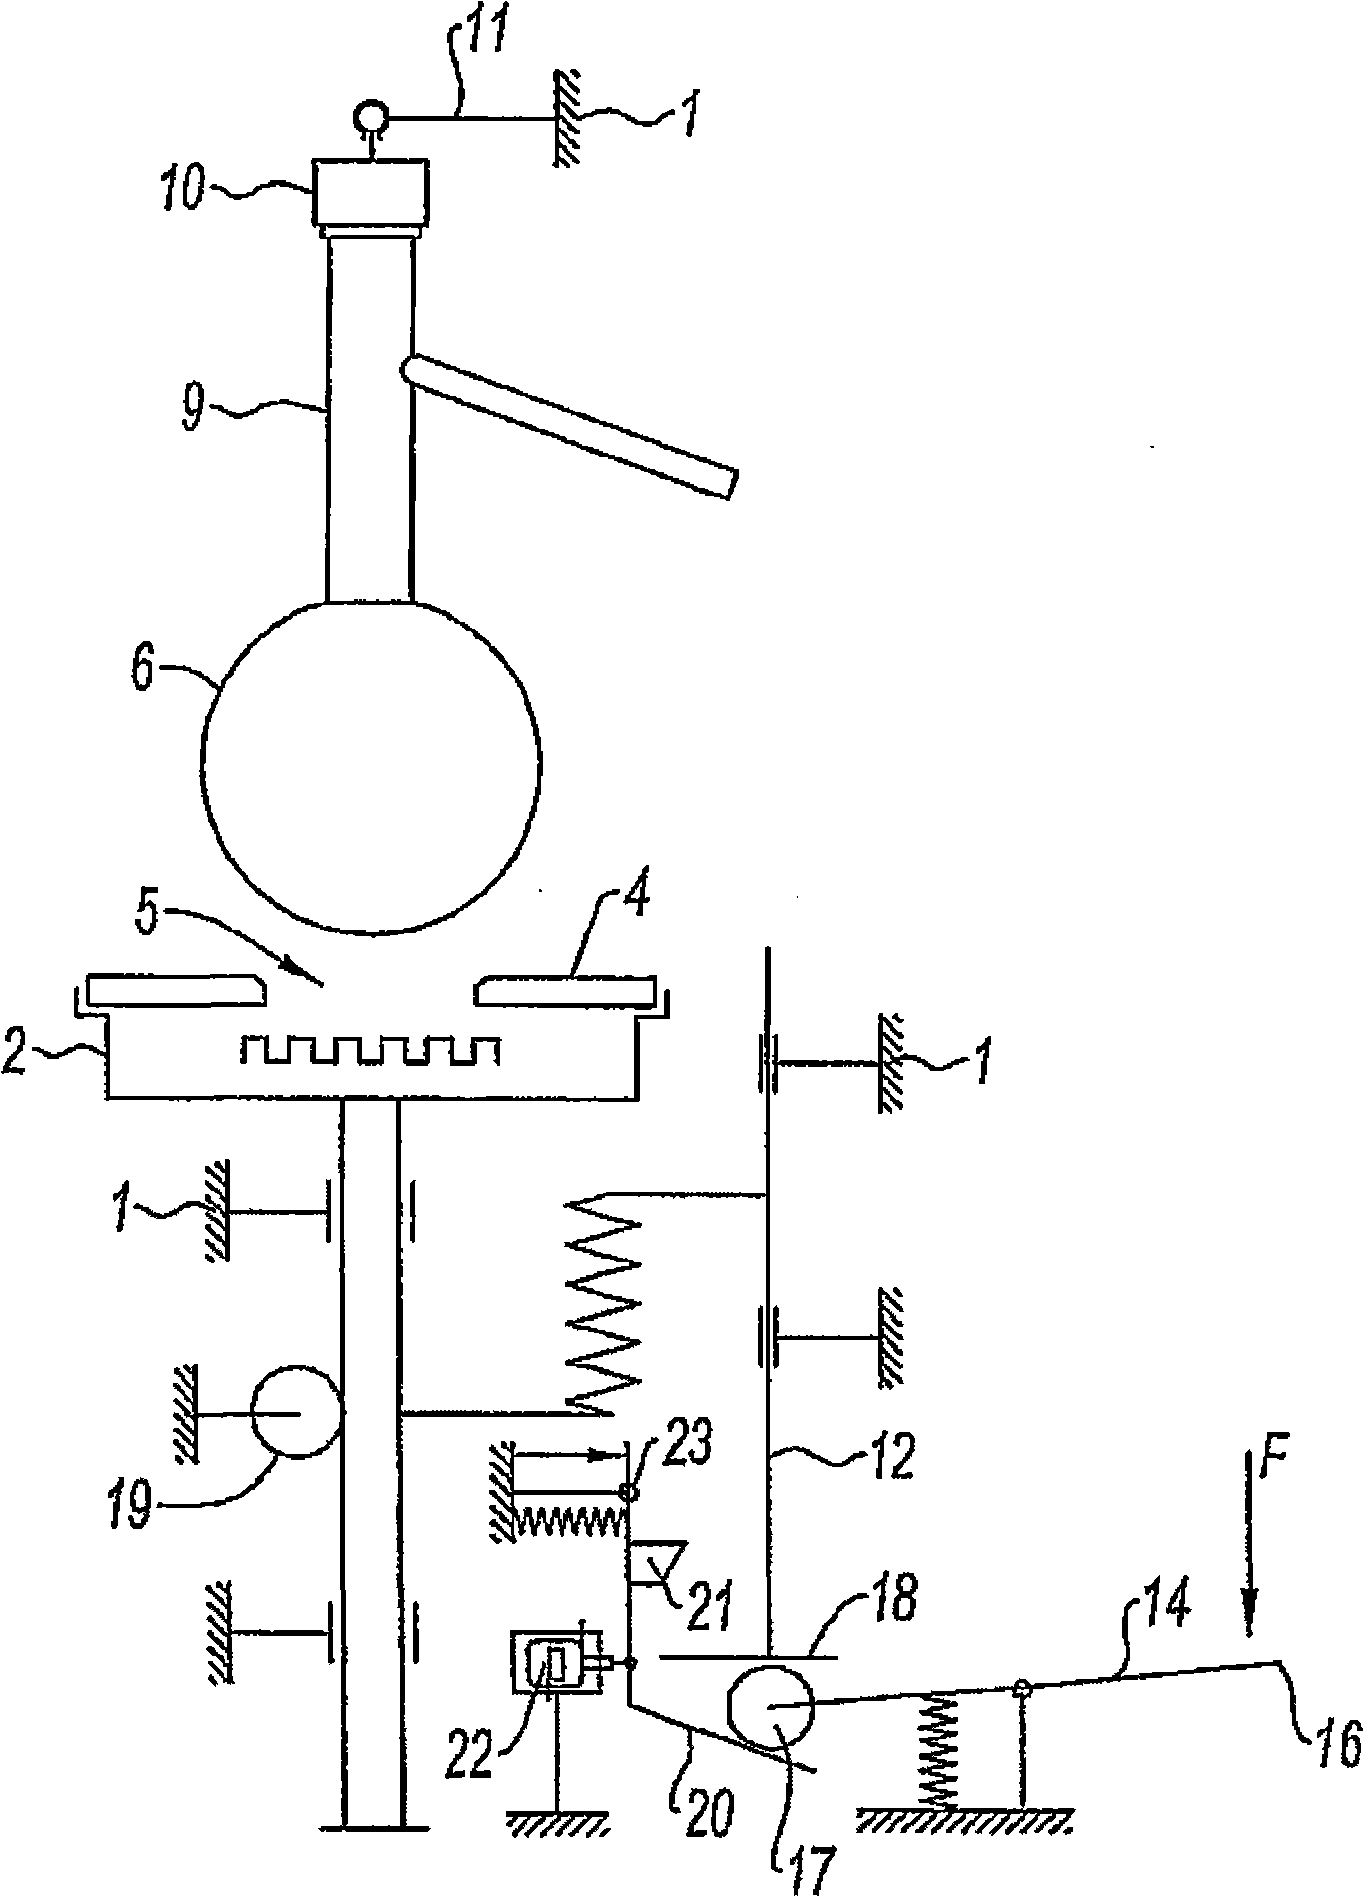 Device for heating globular distillation flask